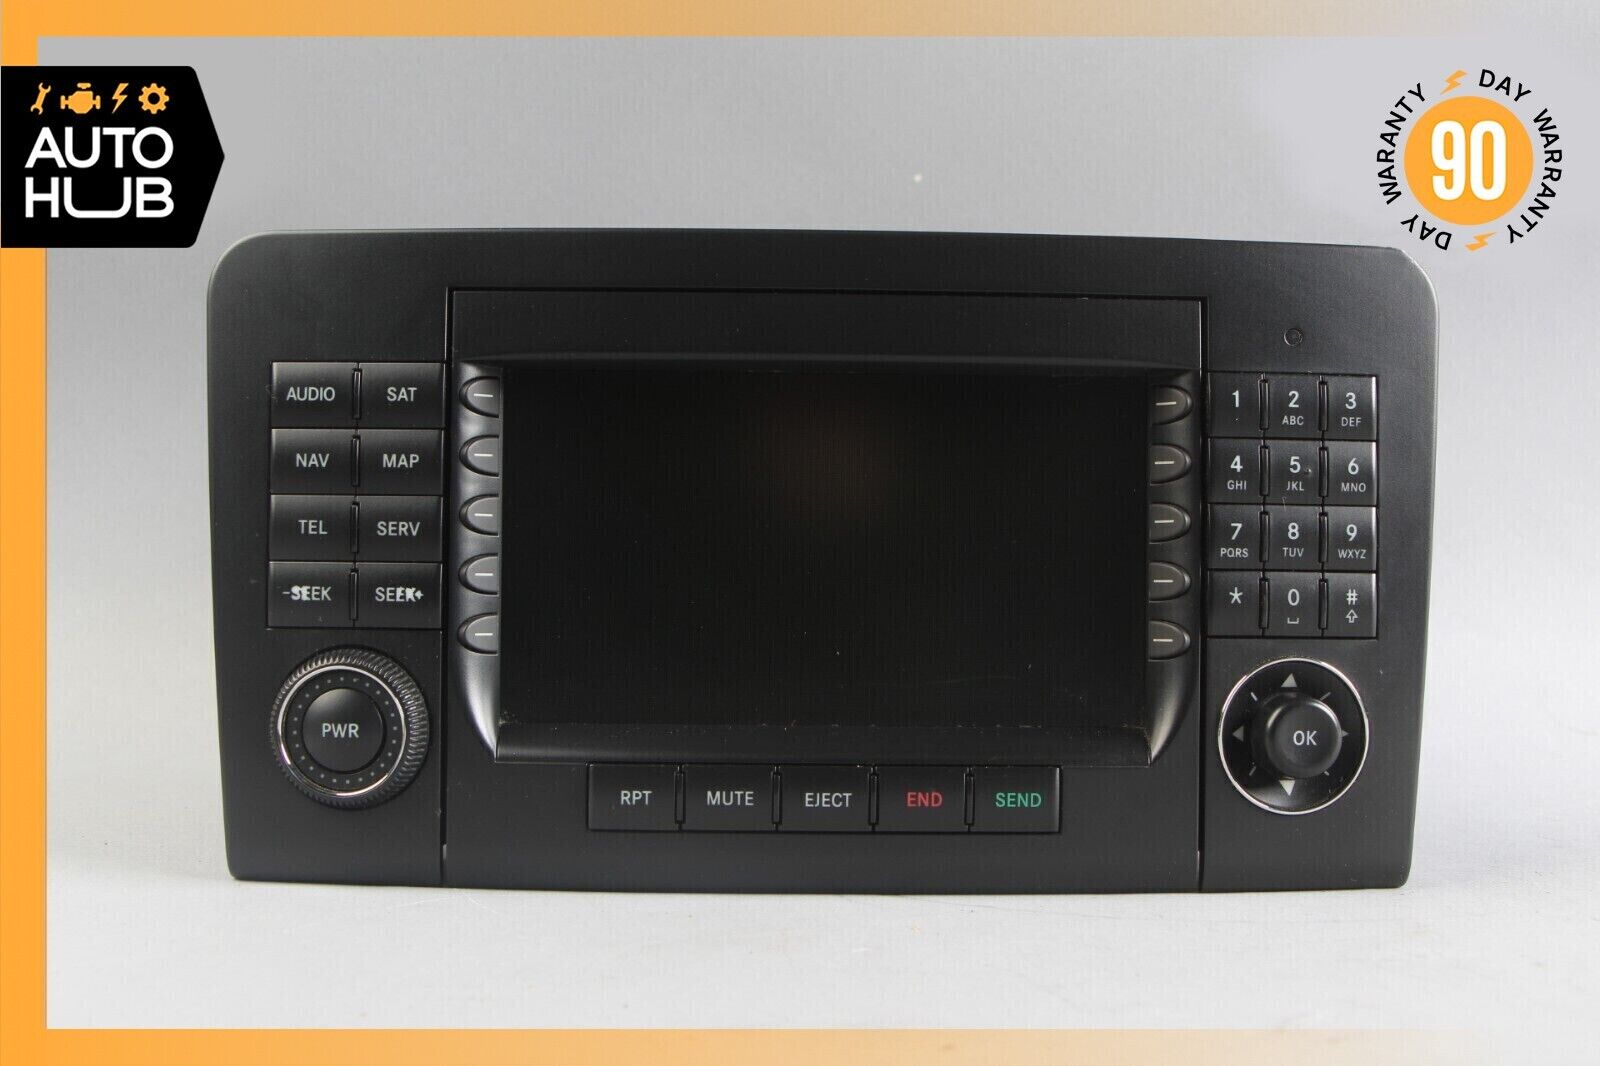 06-08 Mercedes X164 GL450 ML350 ML500 Head Unit Command Navigation Radio CD OEM